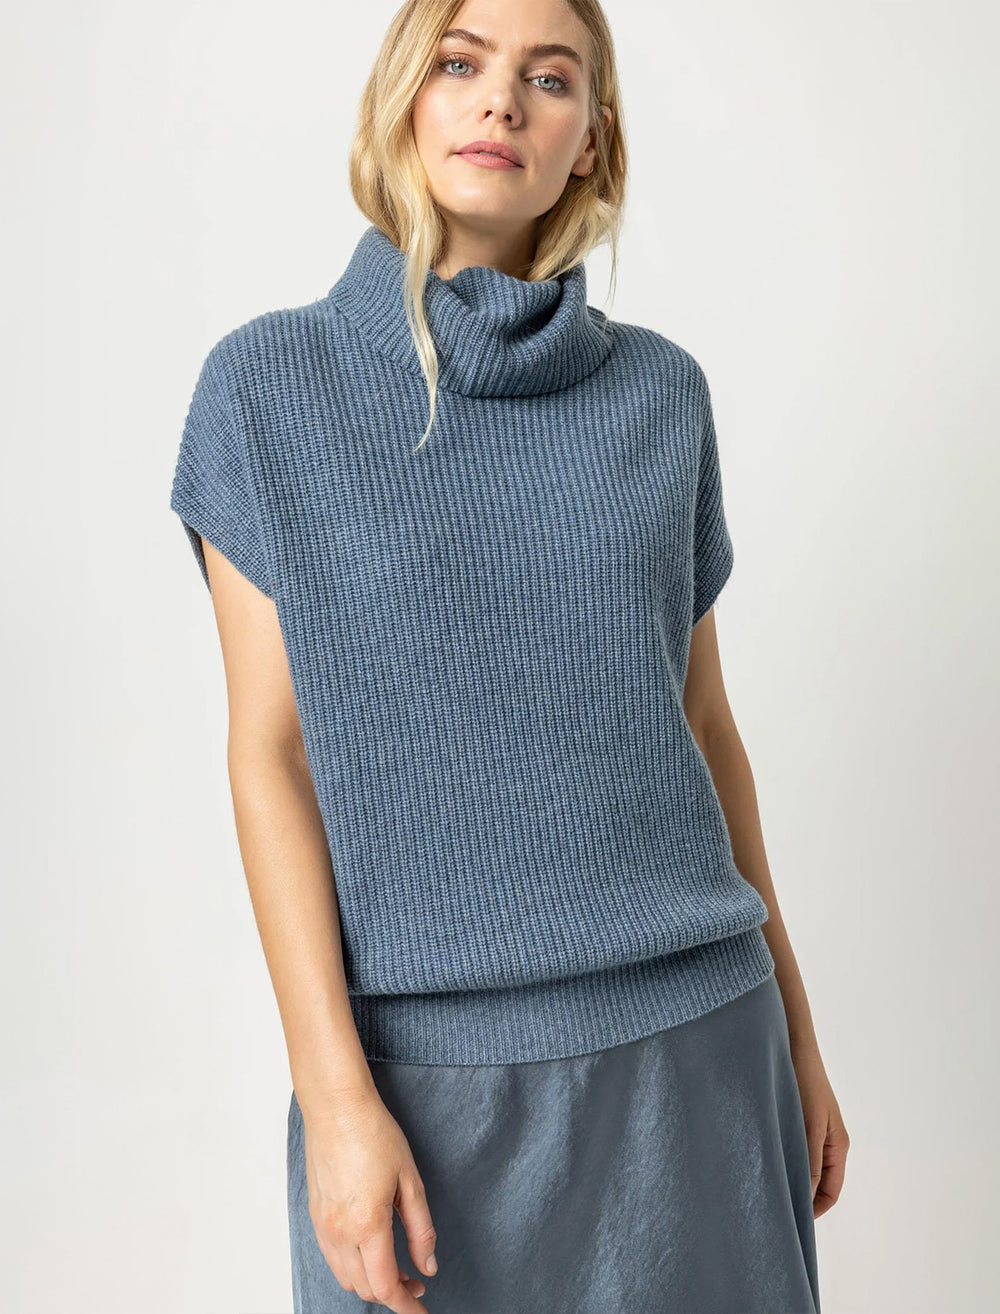 Model wearing Lilla P.'s ribbed turtleneck sweater in nautilus.